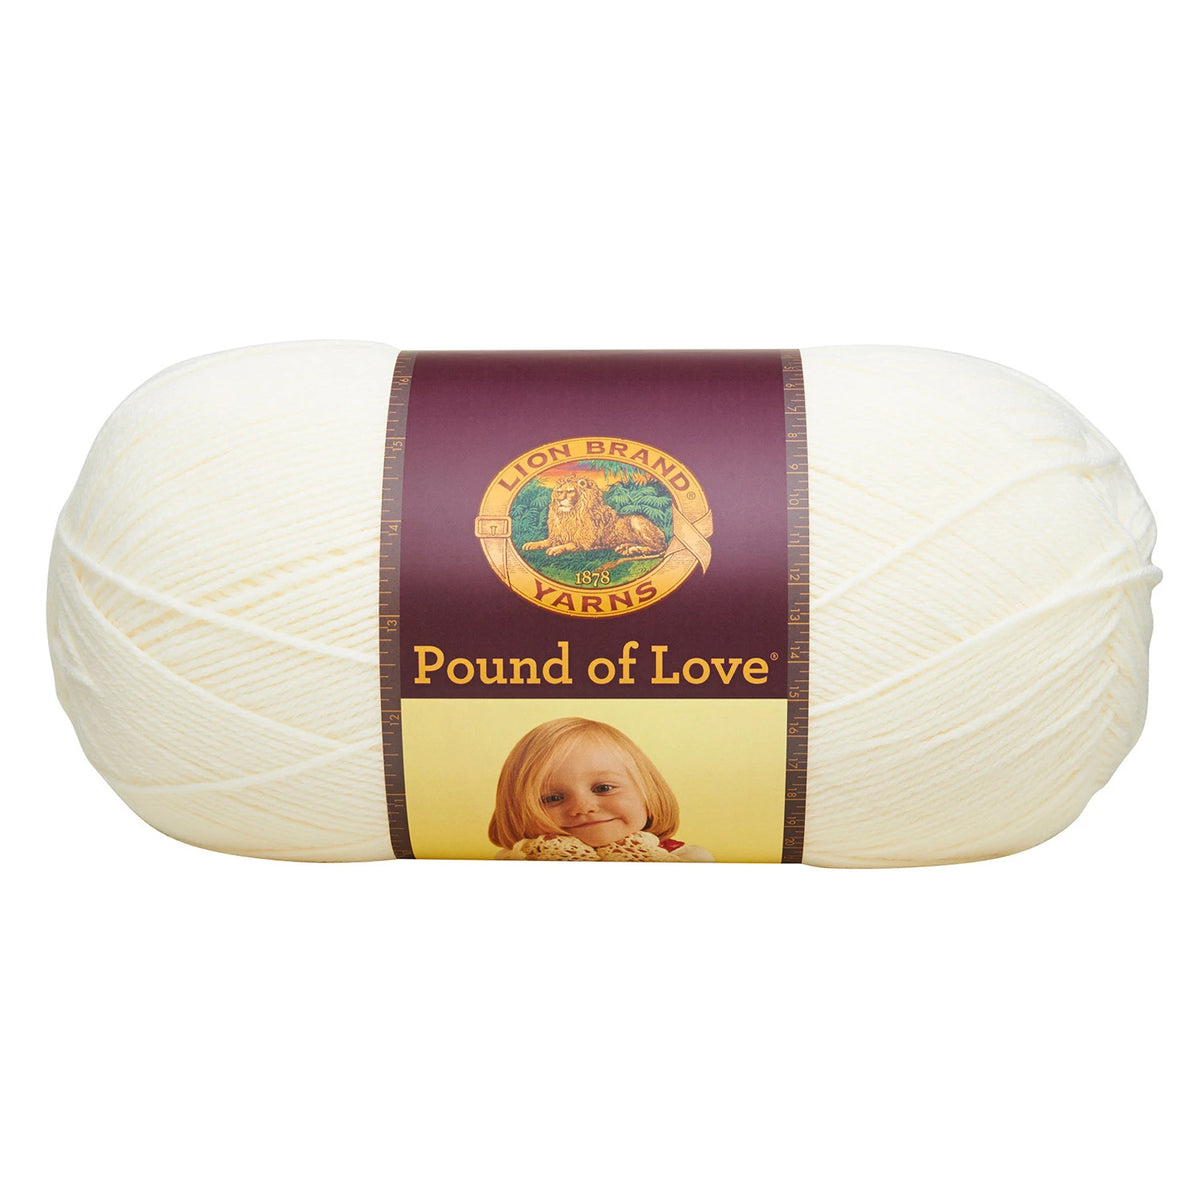 Pound of Love - 454g - Lion Brand – Len's Mill